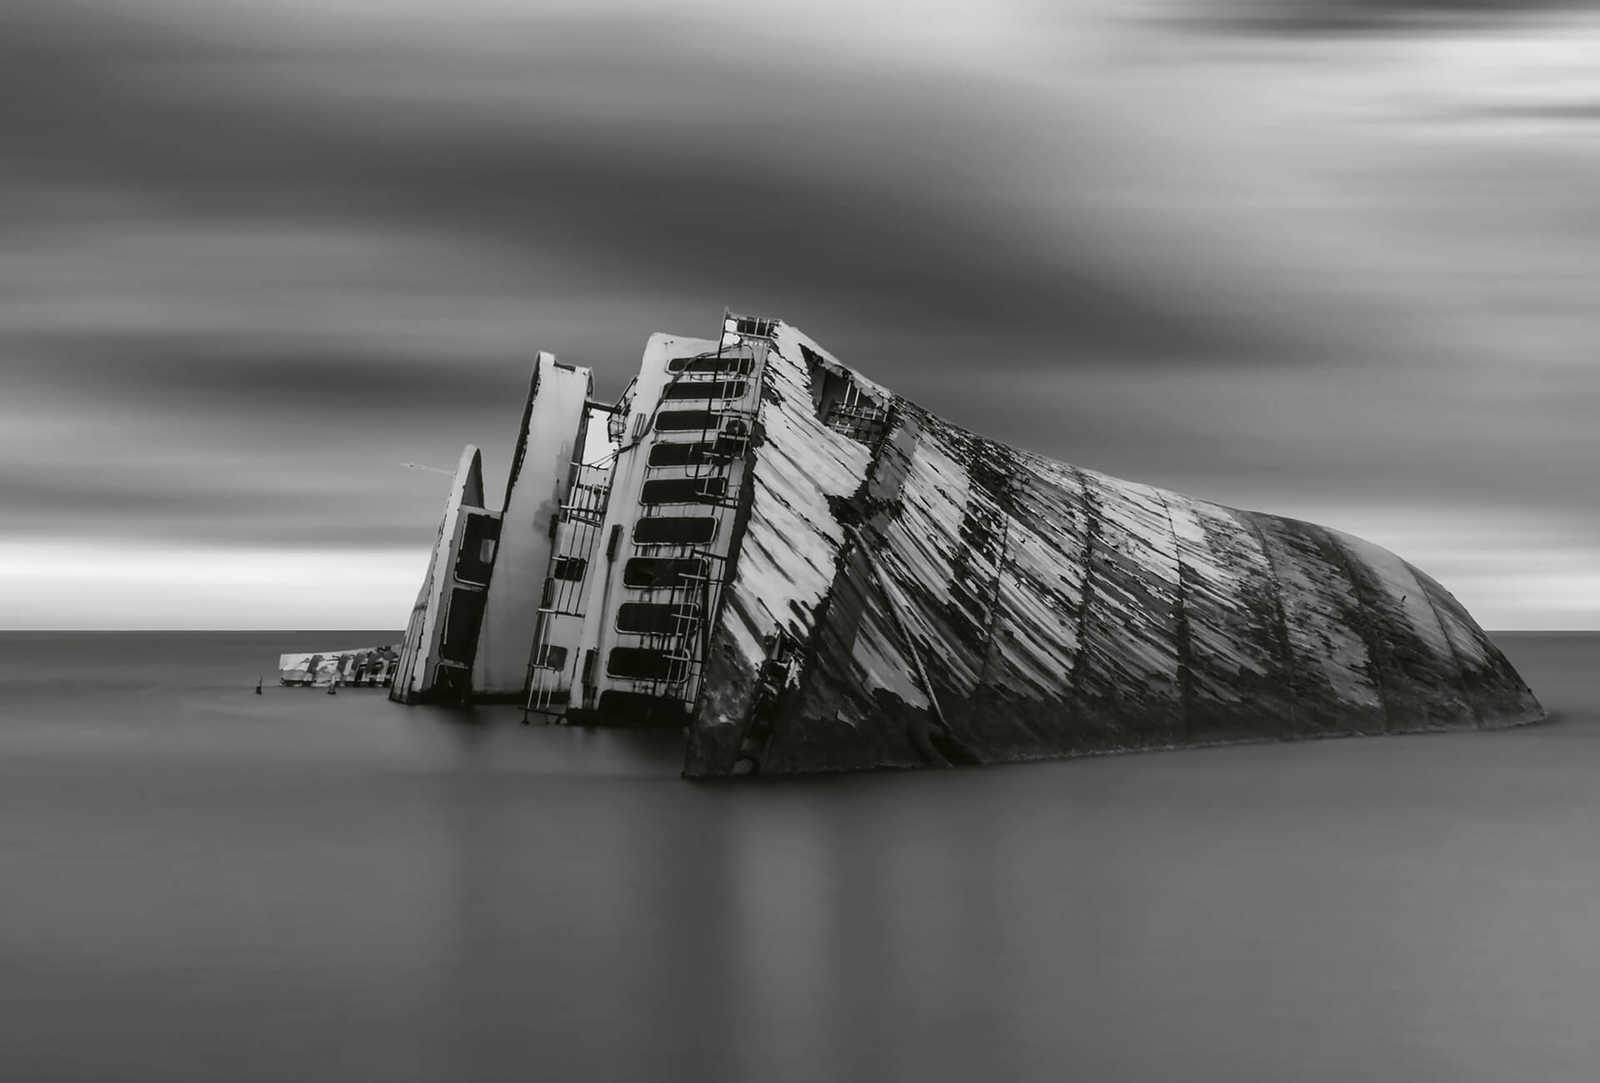         Fototapete Meer mit Schiffswrack – Grau, Weiß, Schwarz
    